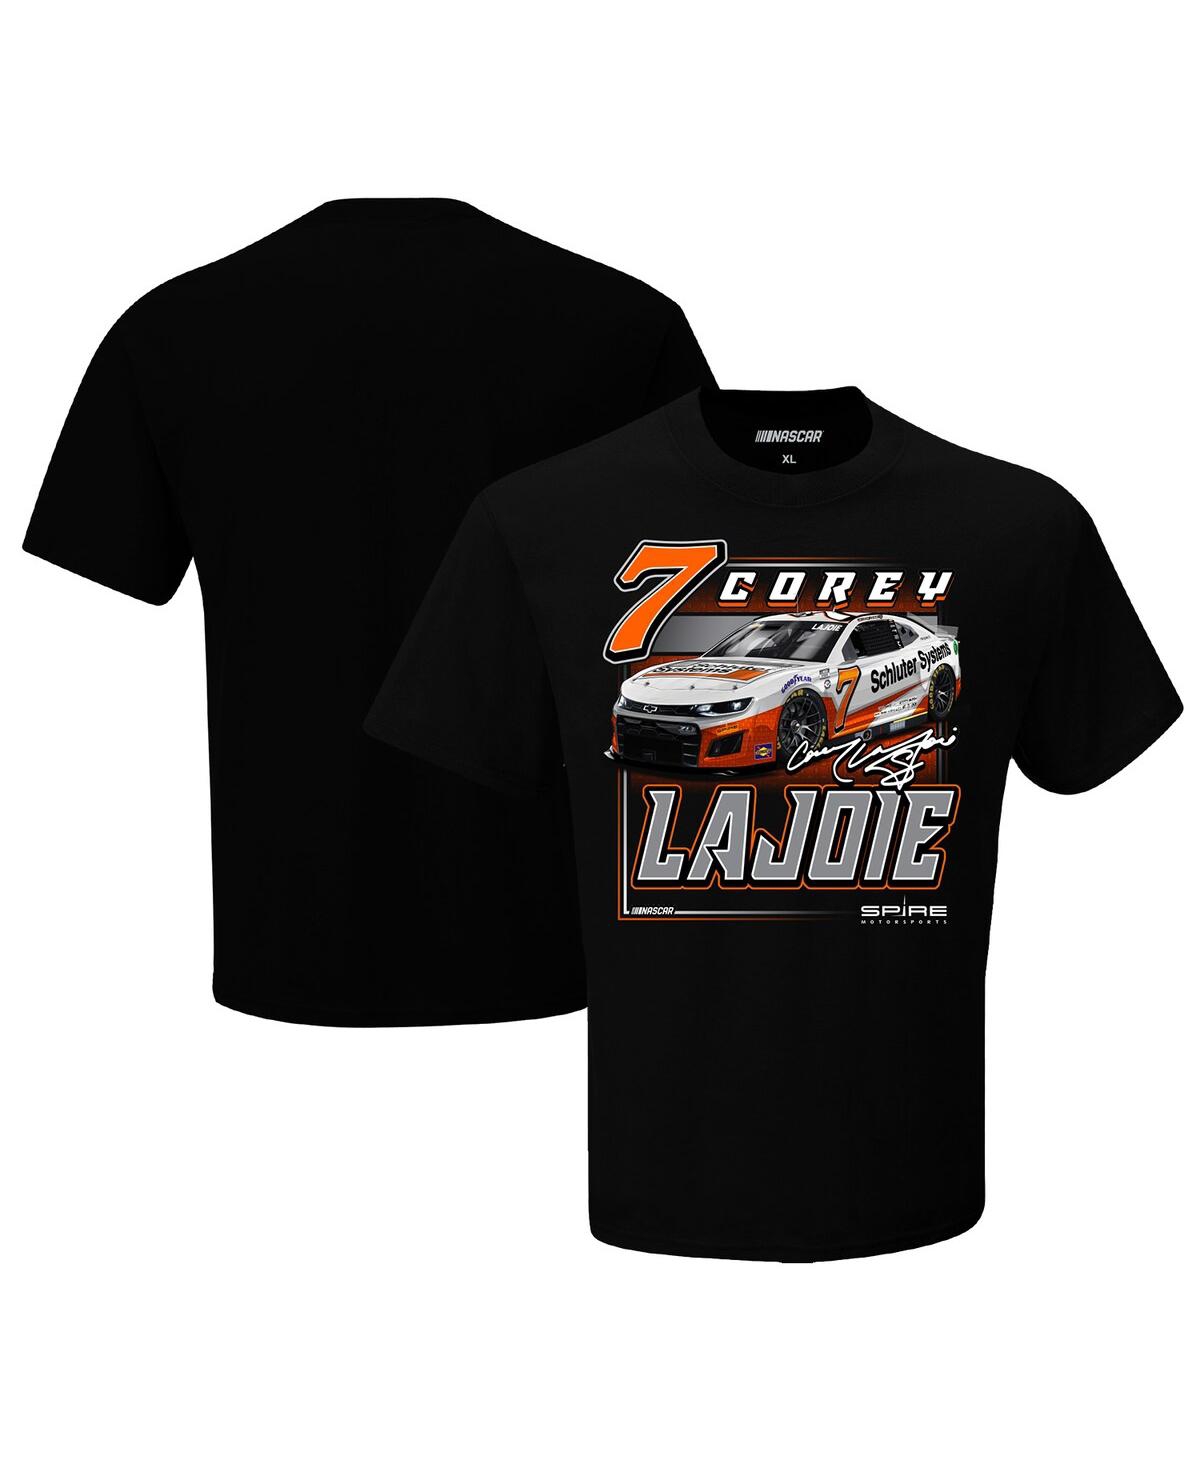 Shop Checkered Flag Sports Men's  Black Corey Lajoie Schluter Systems Car T-shirt